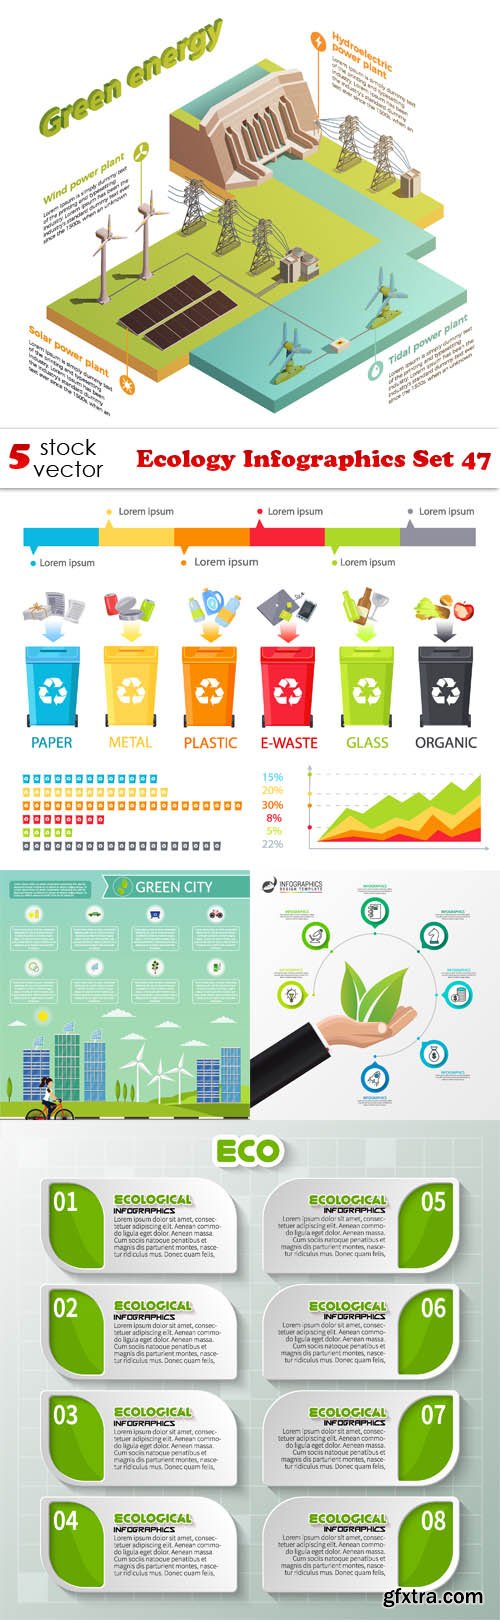 Vectors - Ecology Infographics Set 47